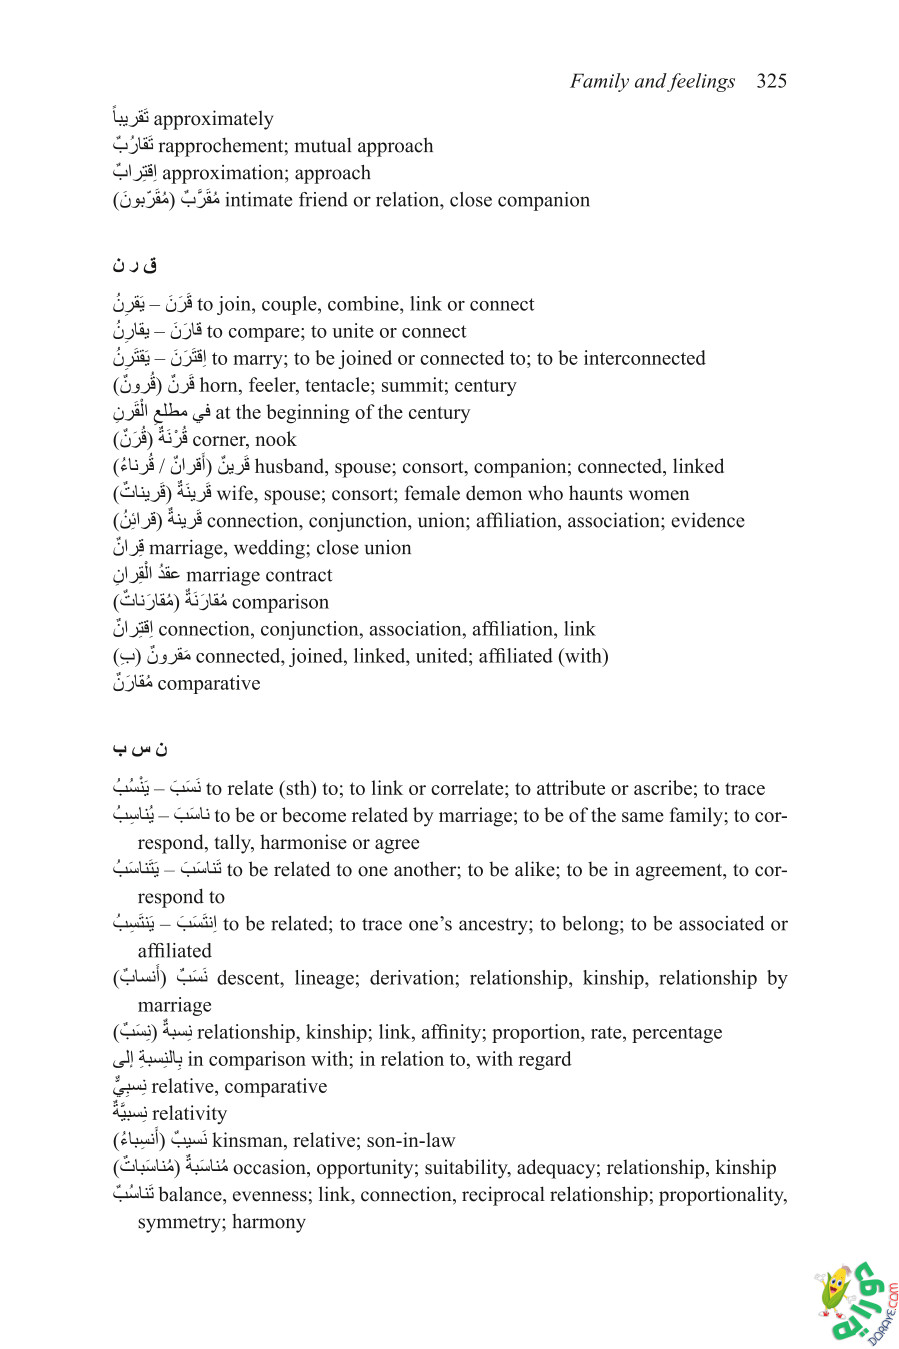 Mastering Arabic Vocabulary For Intermediate to Advanced Learners of Modern Standard Arabic 334 - Mastering Arabic-Vocabulary For Intermediate to Advanced Learners of Modern Standard Arabic